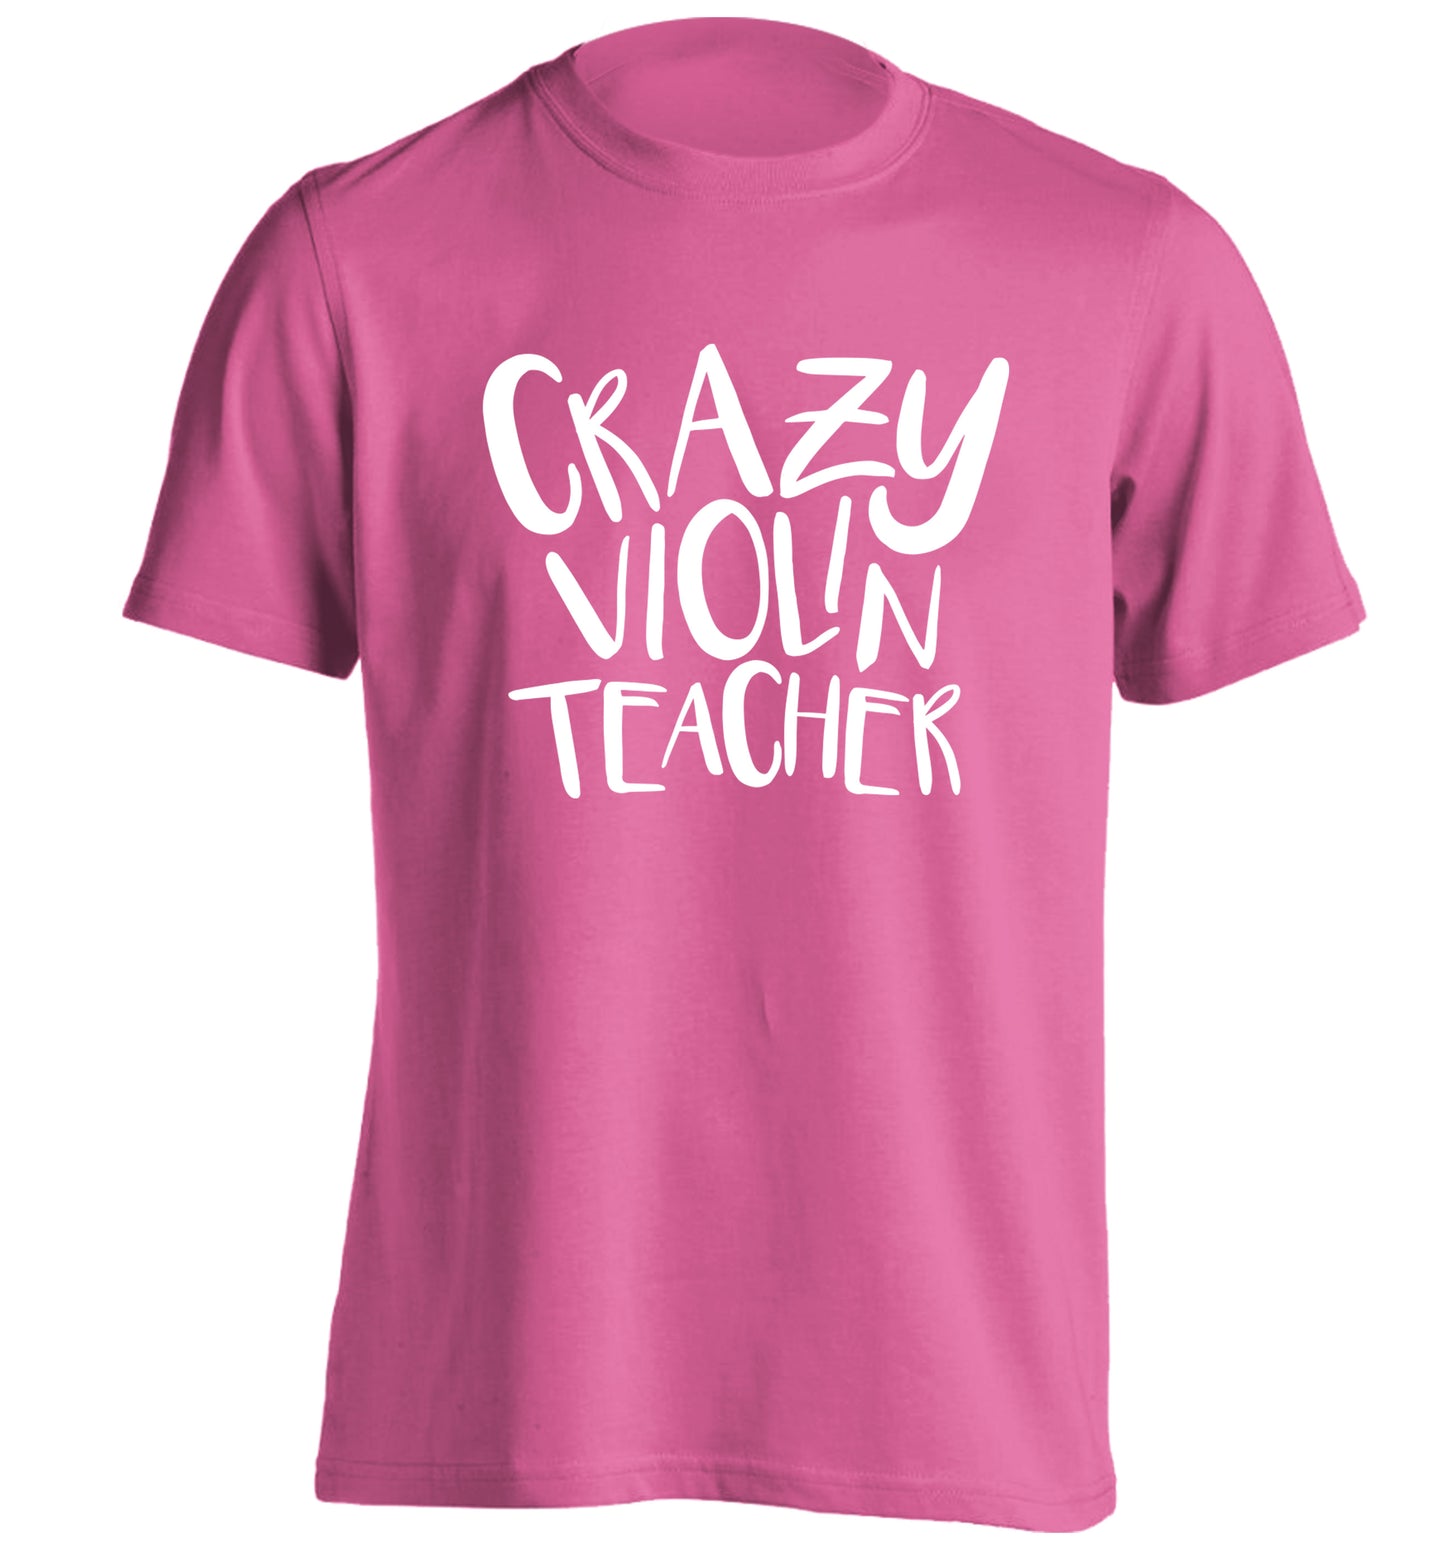 Crazy violin teacher adults unisex pink Tshirt 2XL